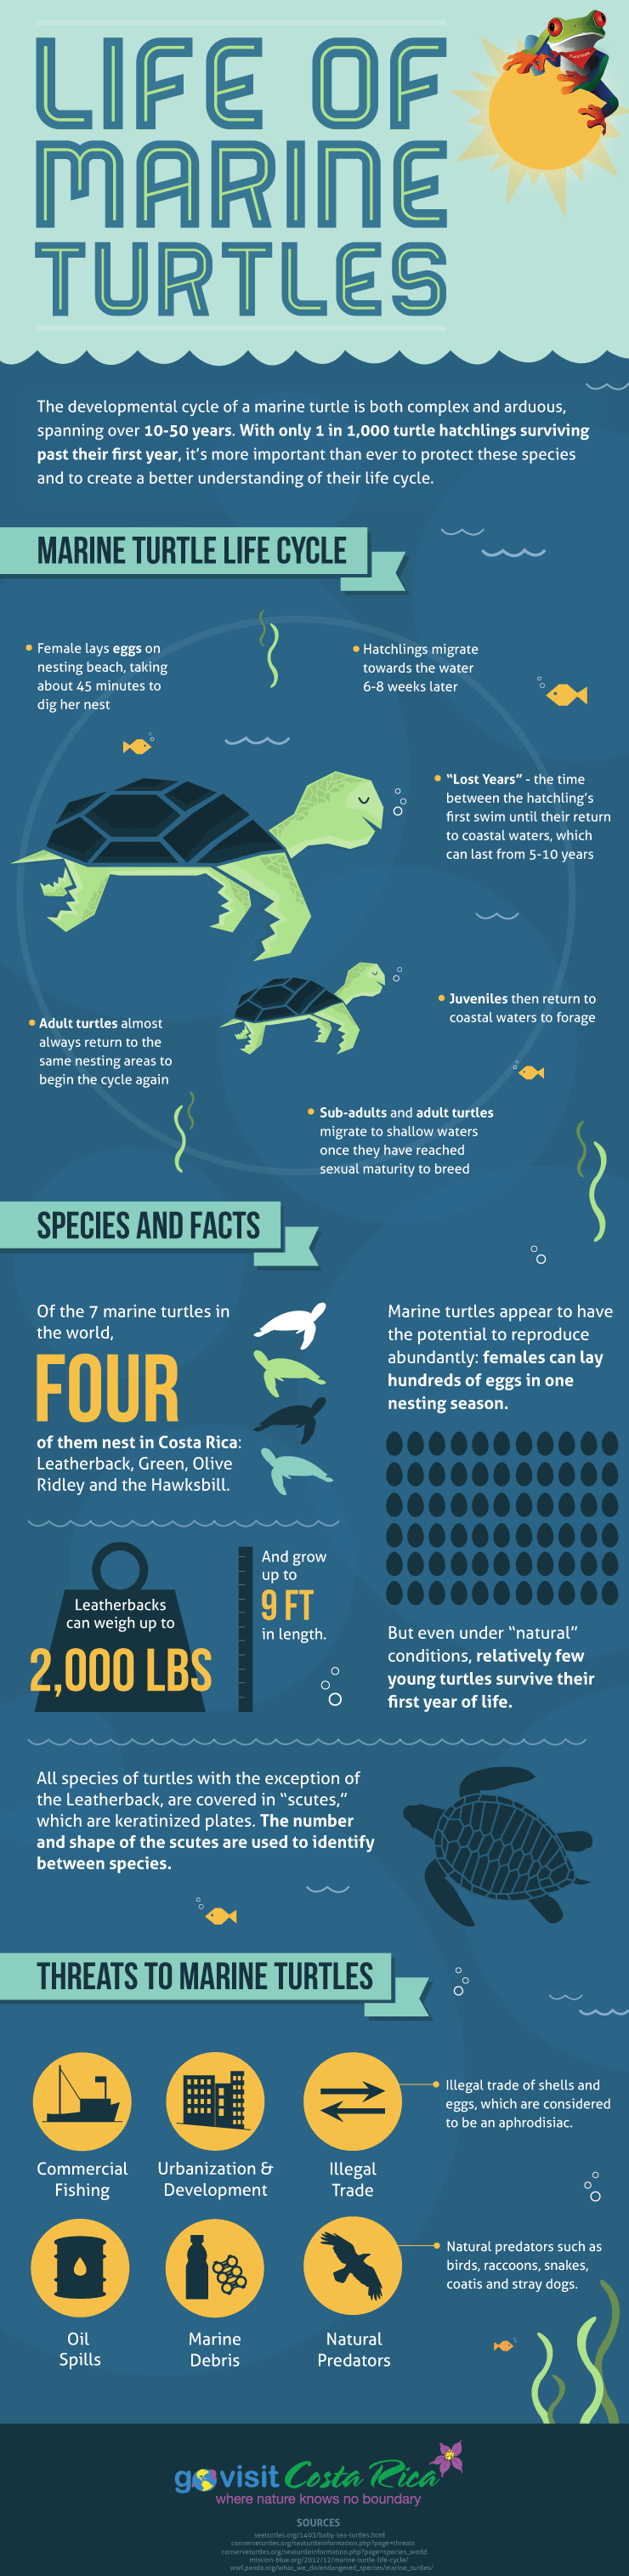 How can we help marine turtles - Infographic - Javi's Travel Blog - Go